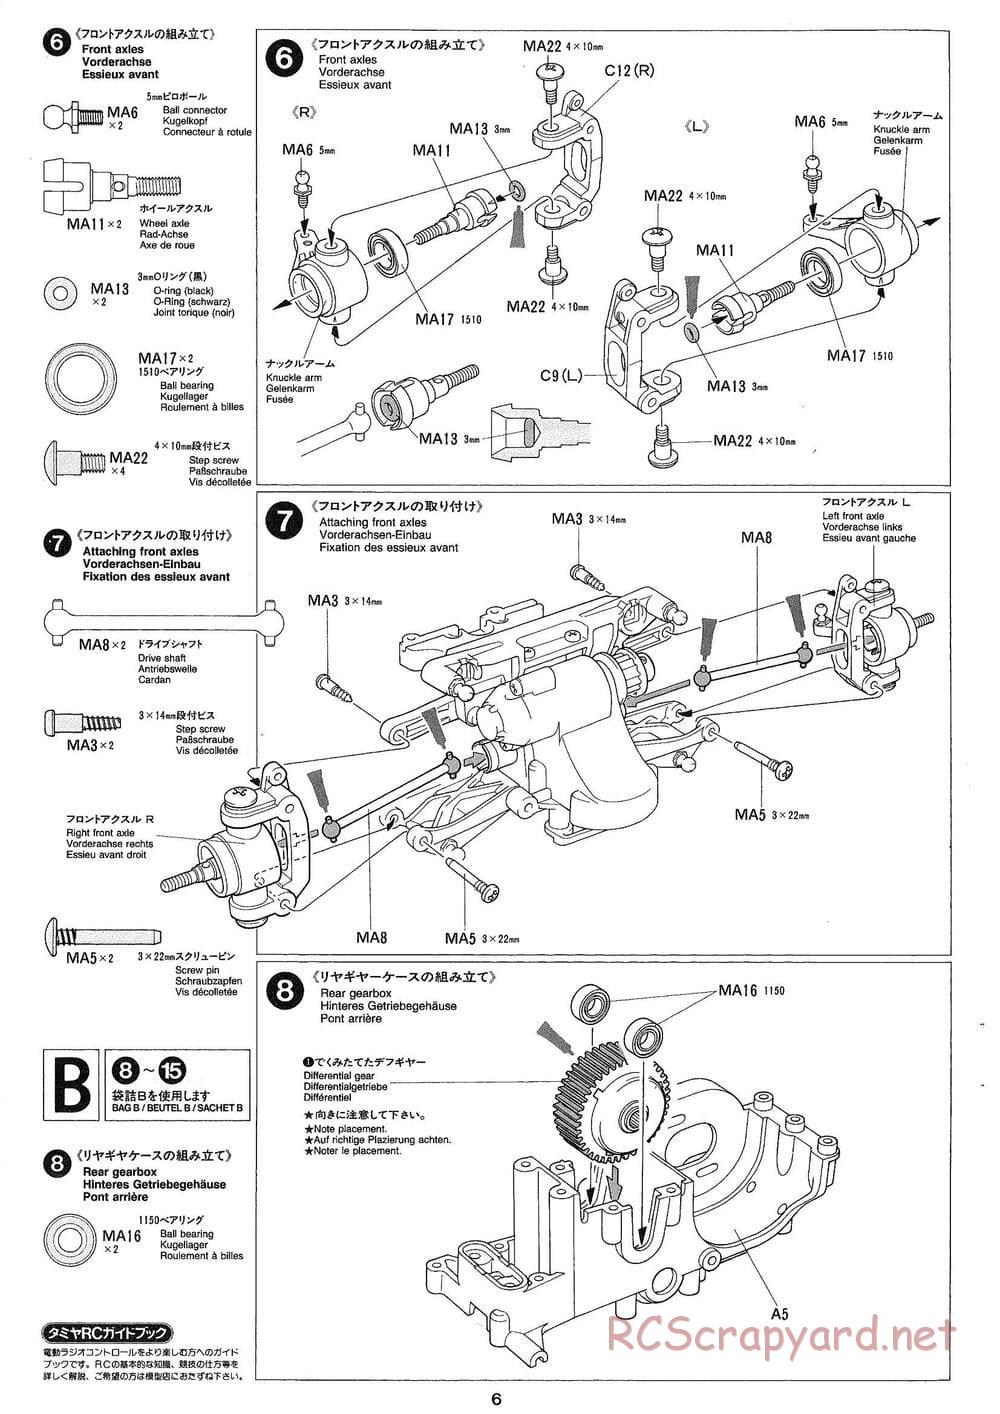 Tamiya - Mobil 1 NSX - TA-03R Chassis - Manual - Page 6